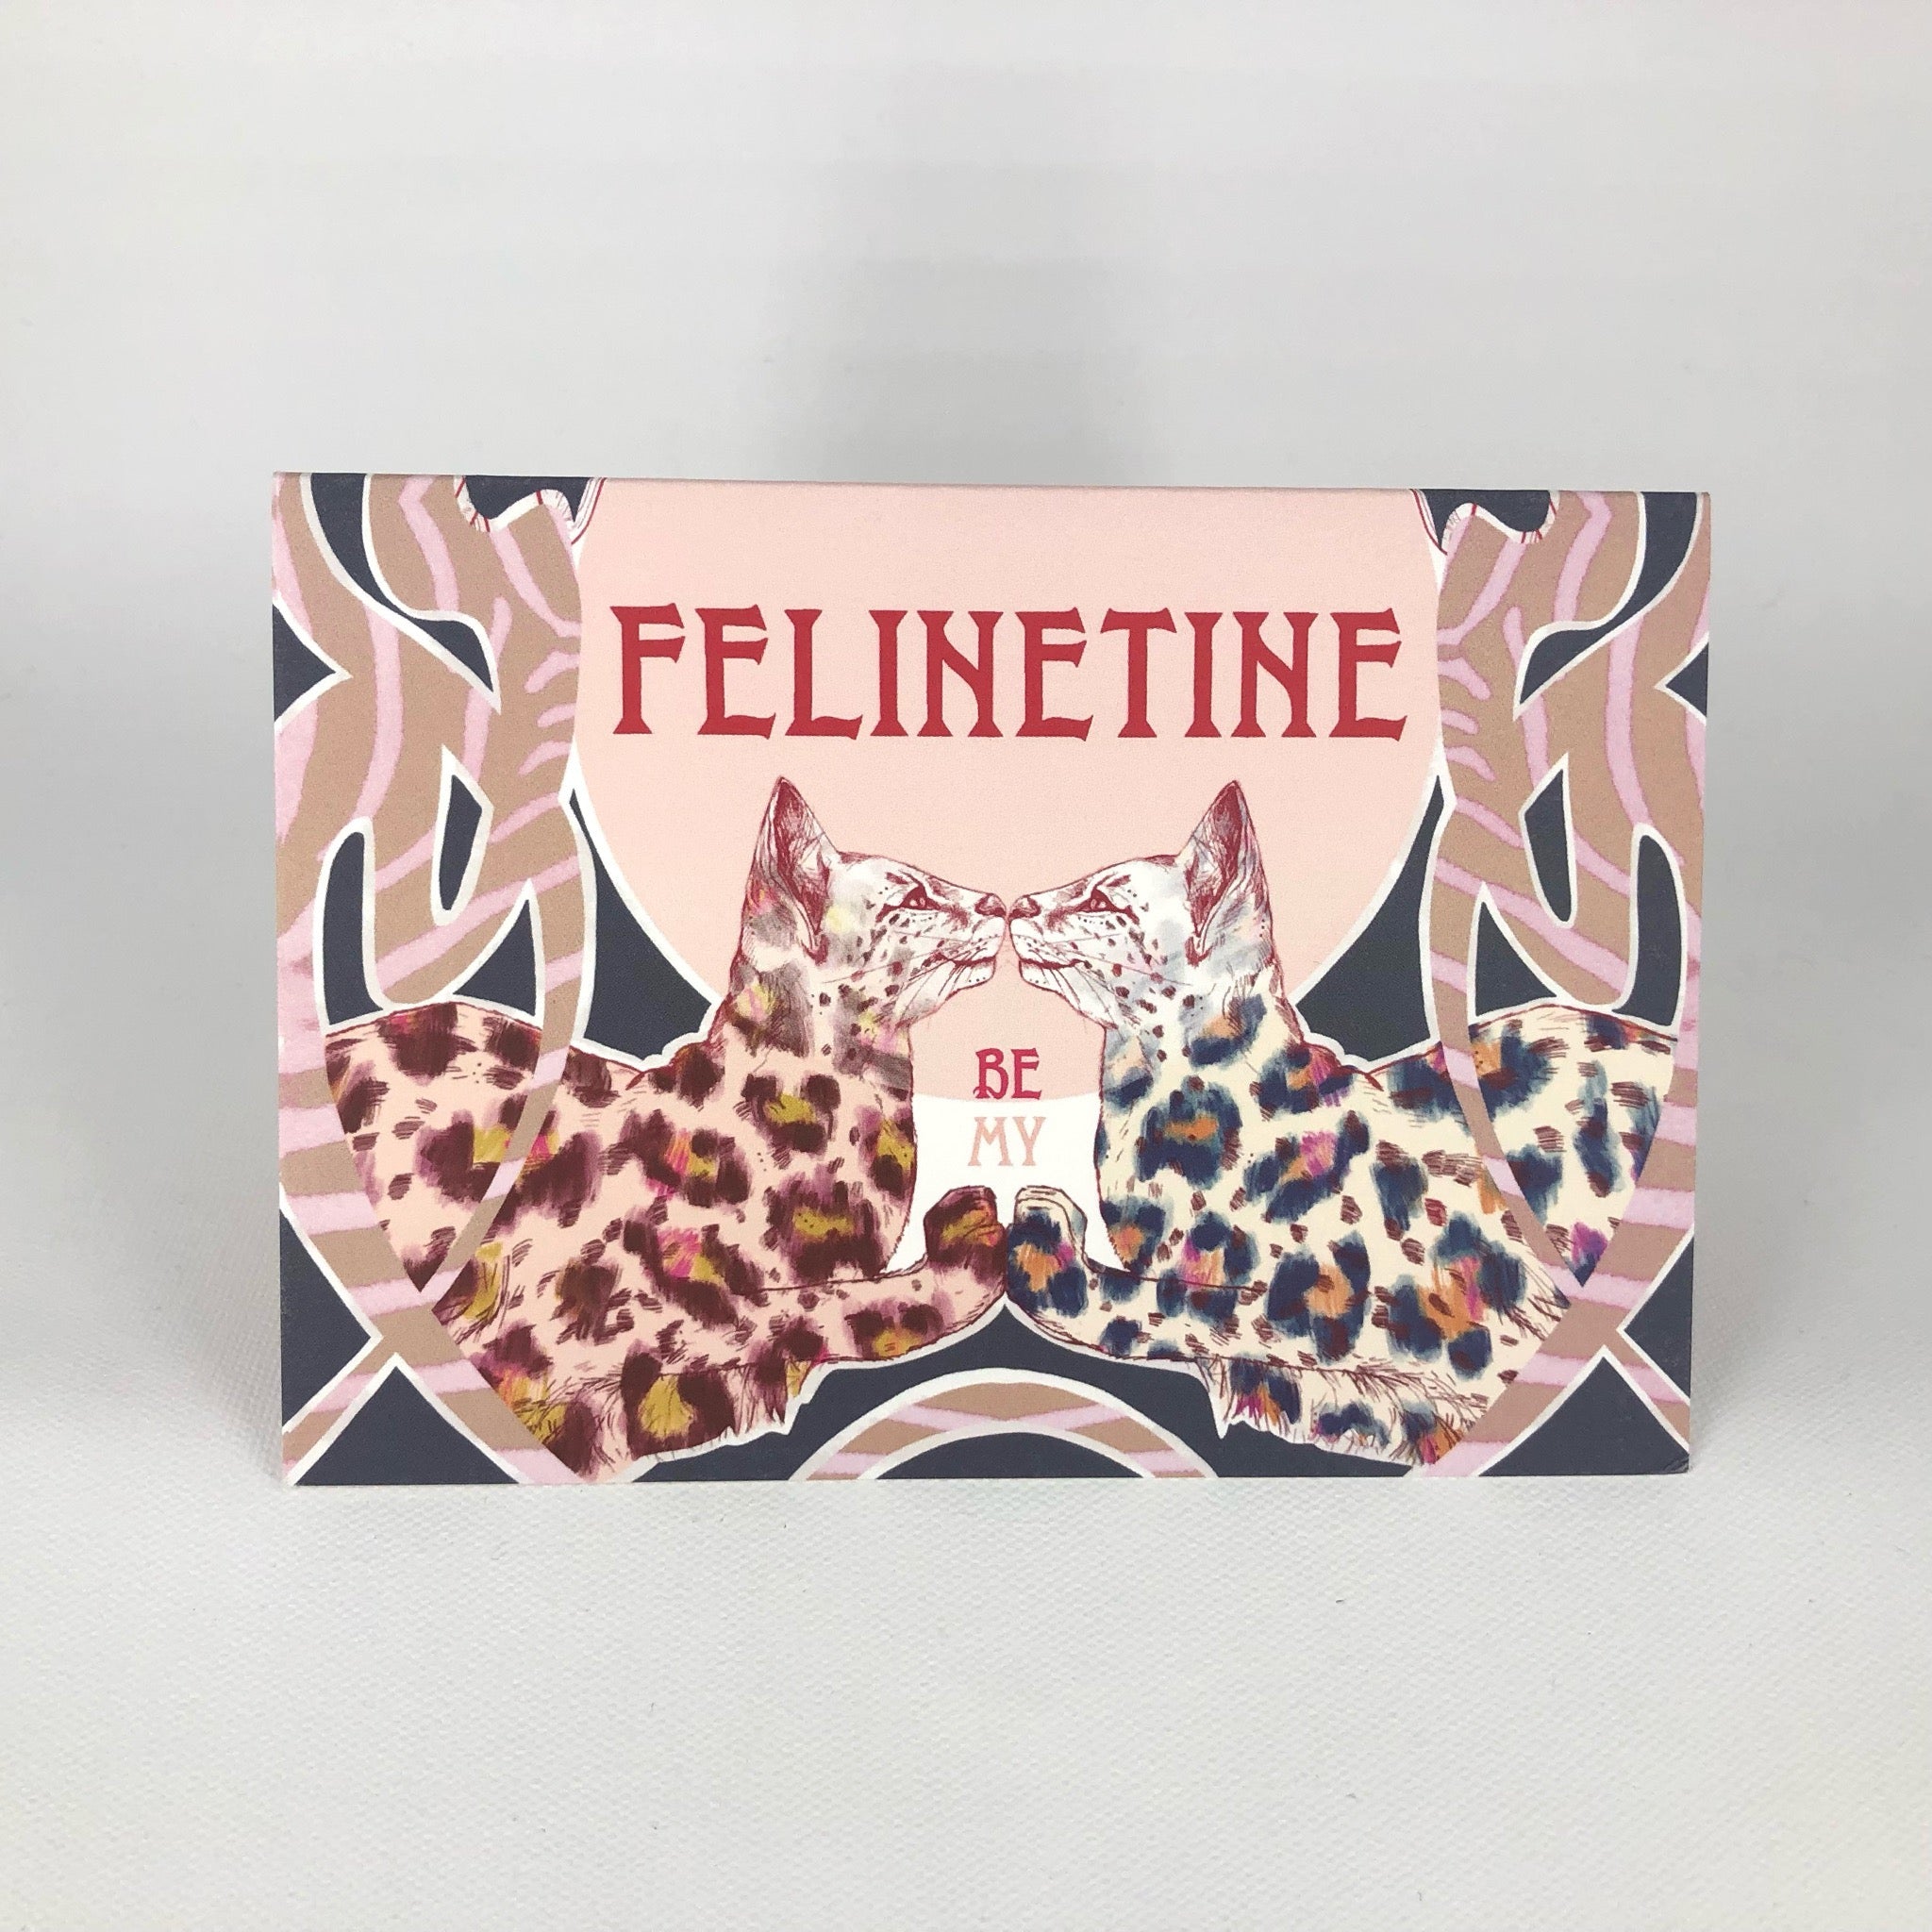 Be My Felinetine Greeting Card